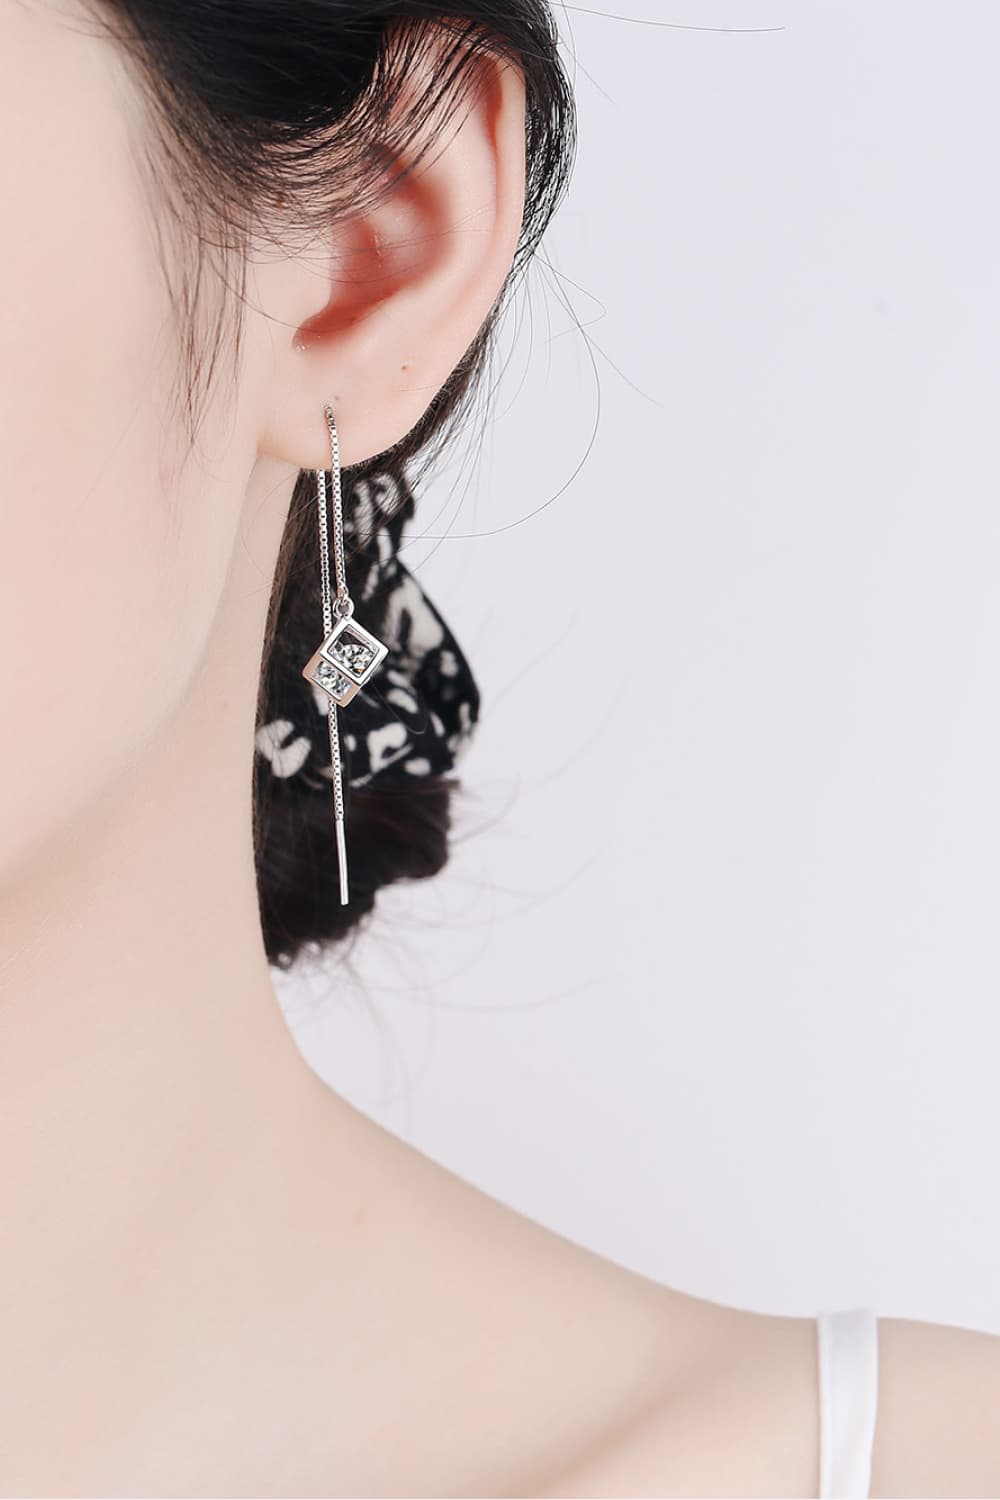 2 Carat Moissanite 925 Sterling Silver Threader Earrings - Earrings - FITGGINS